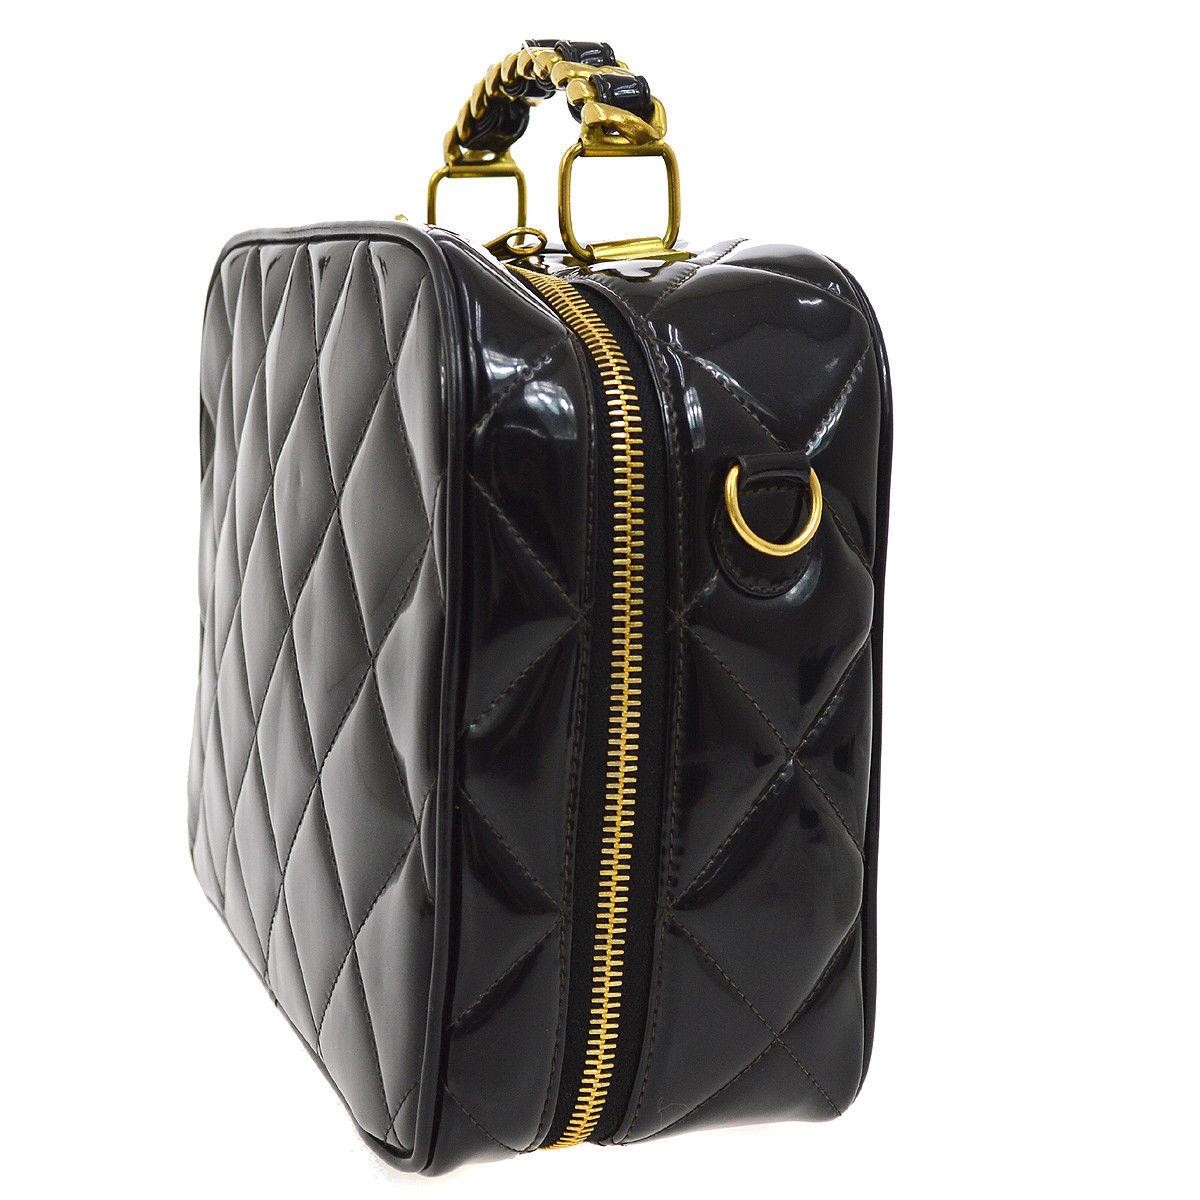 Women's Chanel Black Patent Leather Lunch Travel Top Handle Satchel Tote Shoulder Bag